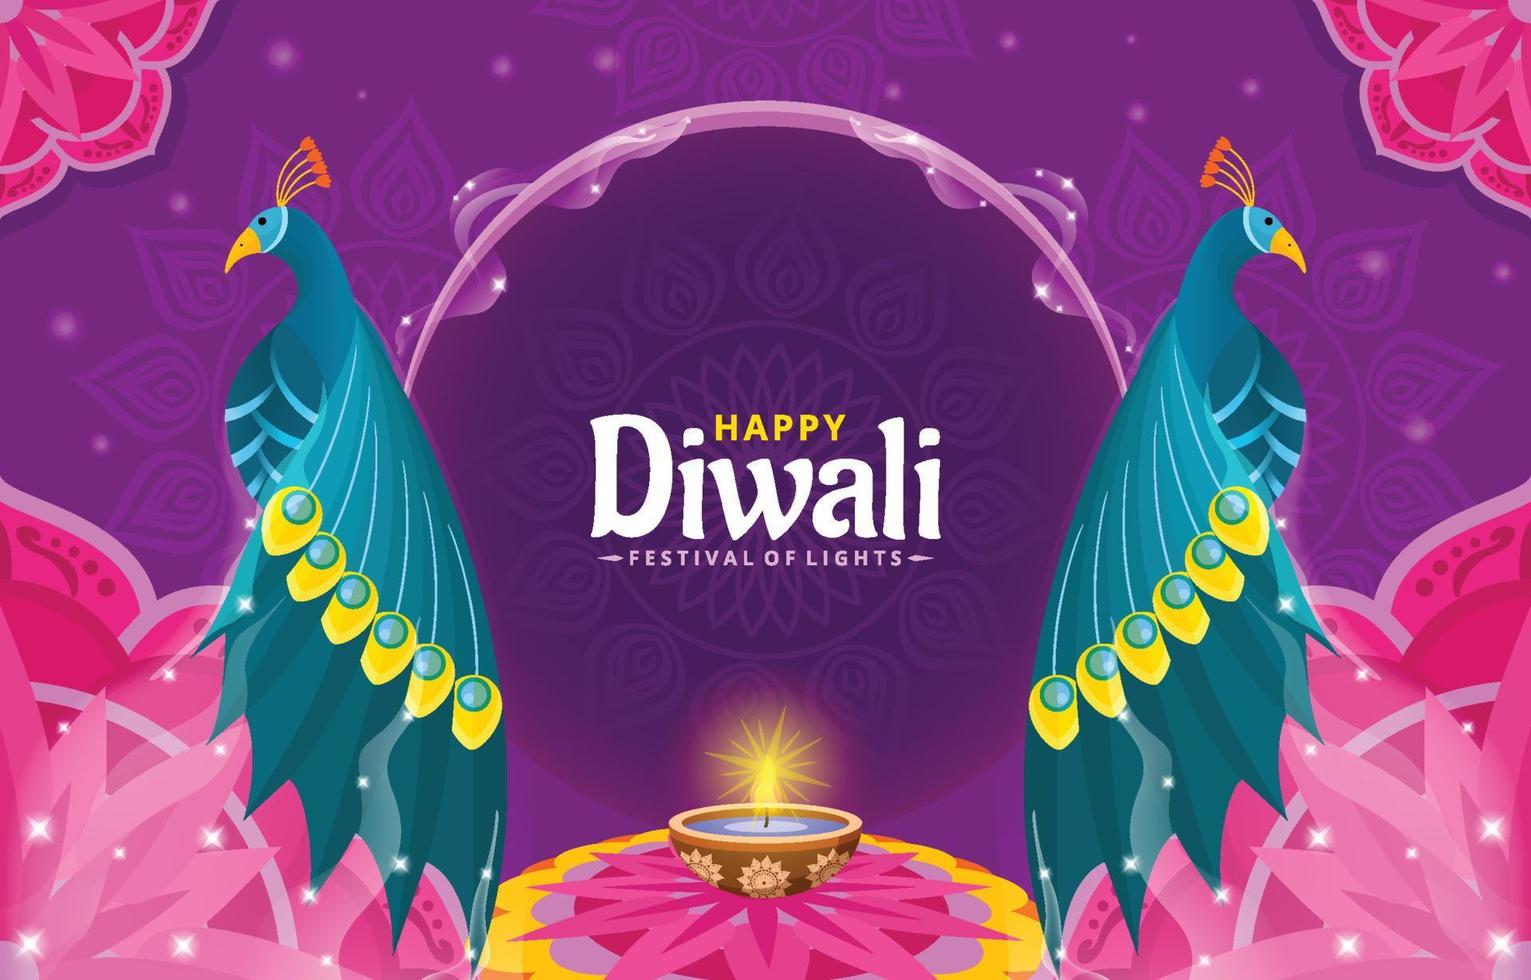 Happy Diwali Festival of Lights vector